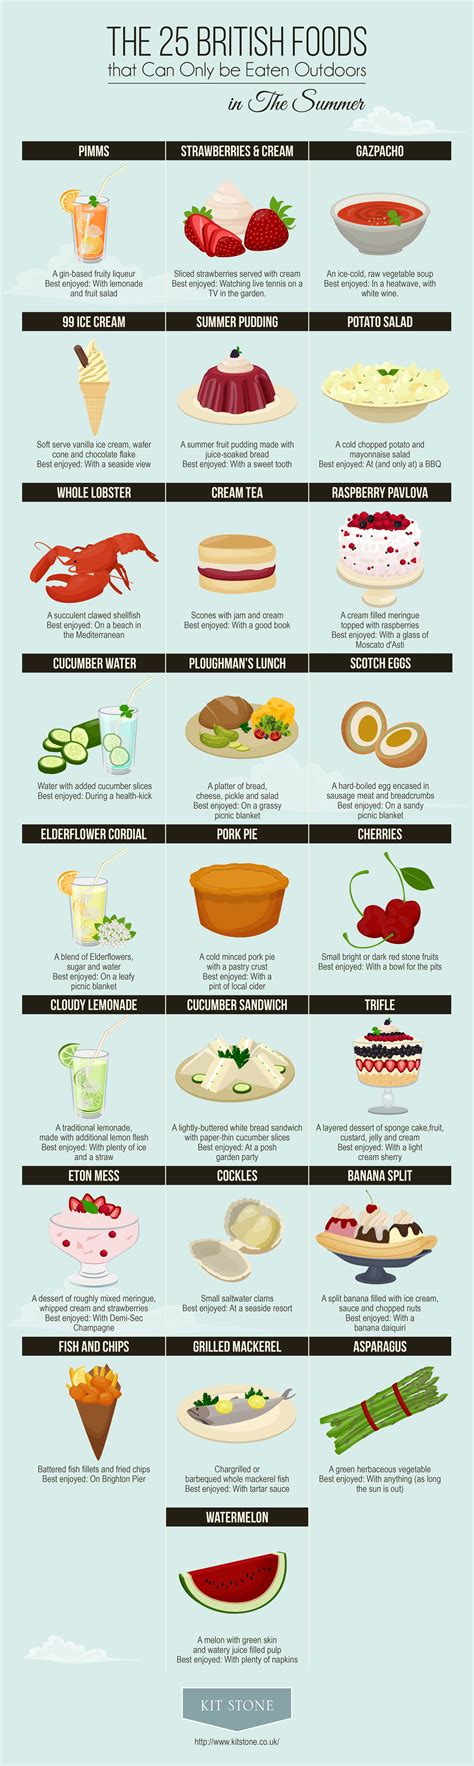 Food Infographic British Summer Foods